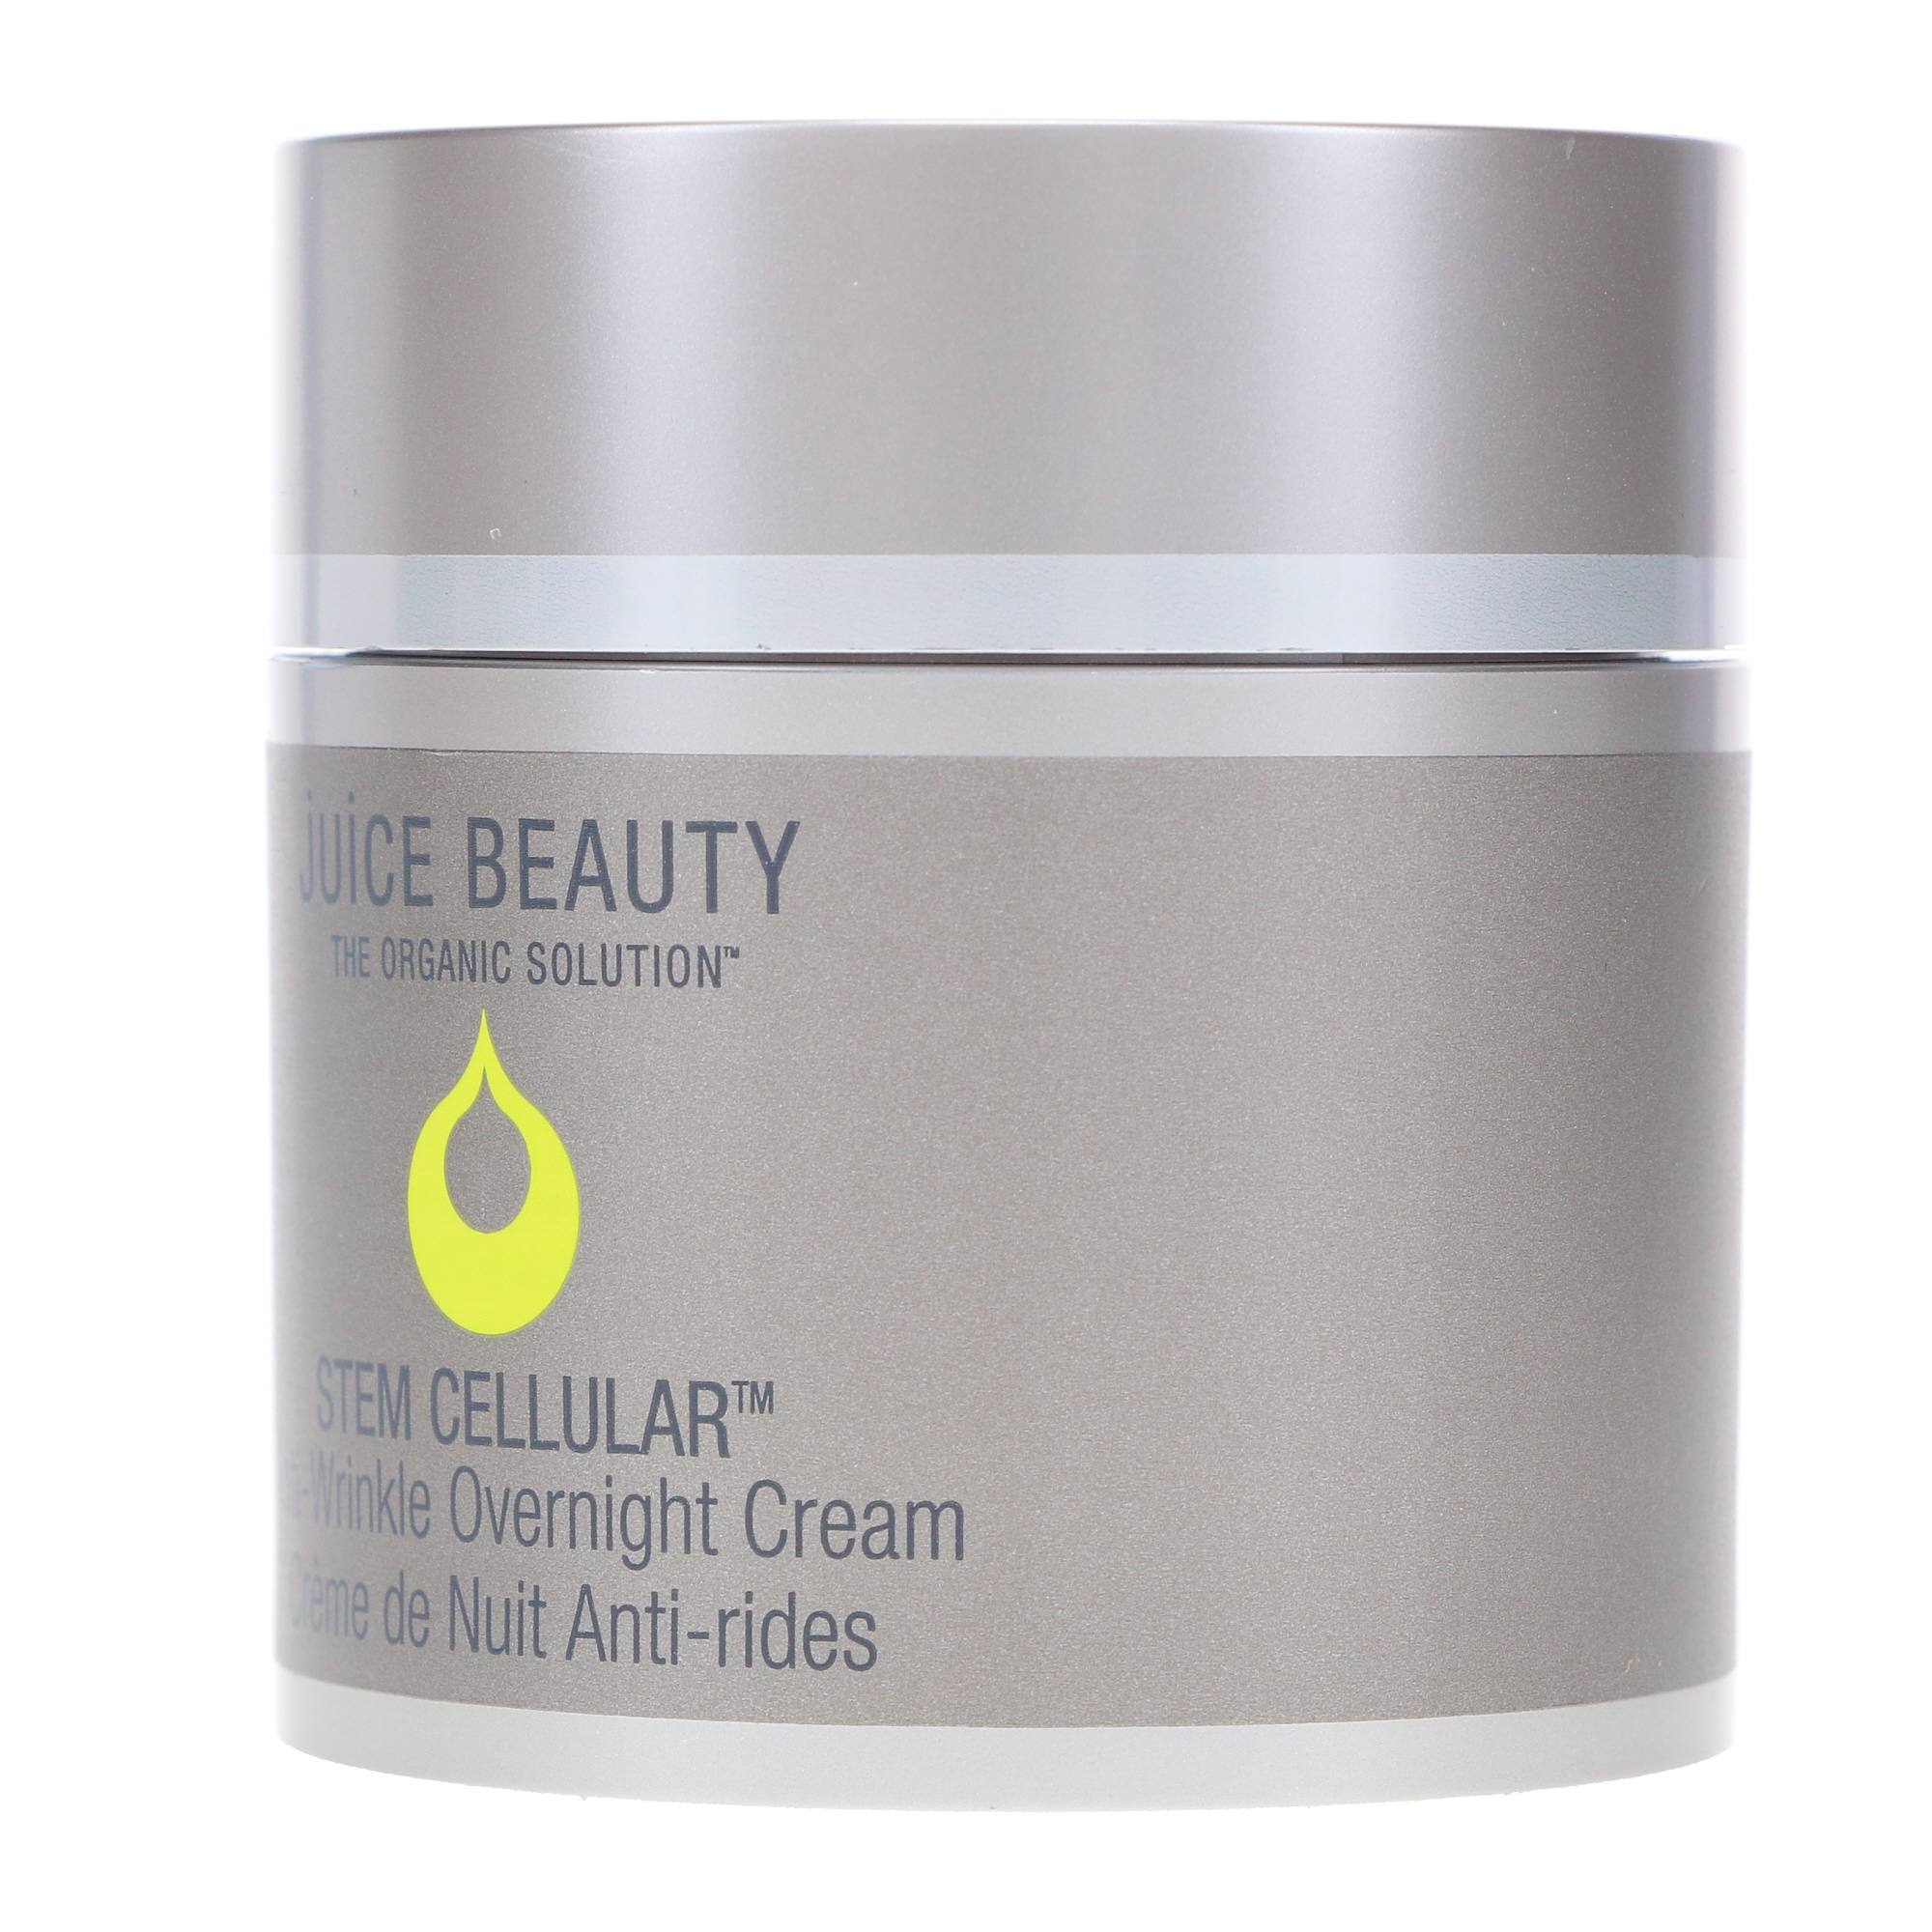 Juice Beauty Stem Cellular Anti-Wrinkle Overnight Cream 1.7 oz - LaLa Daisy